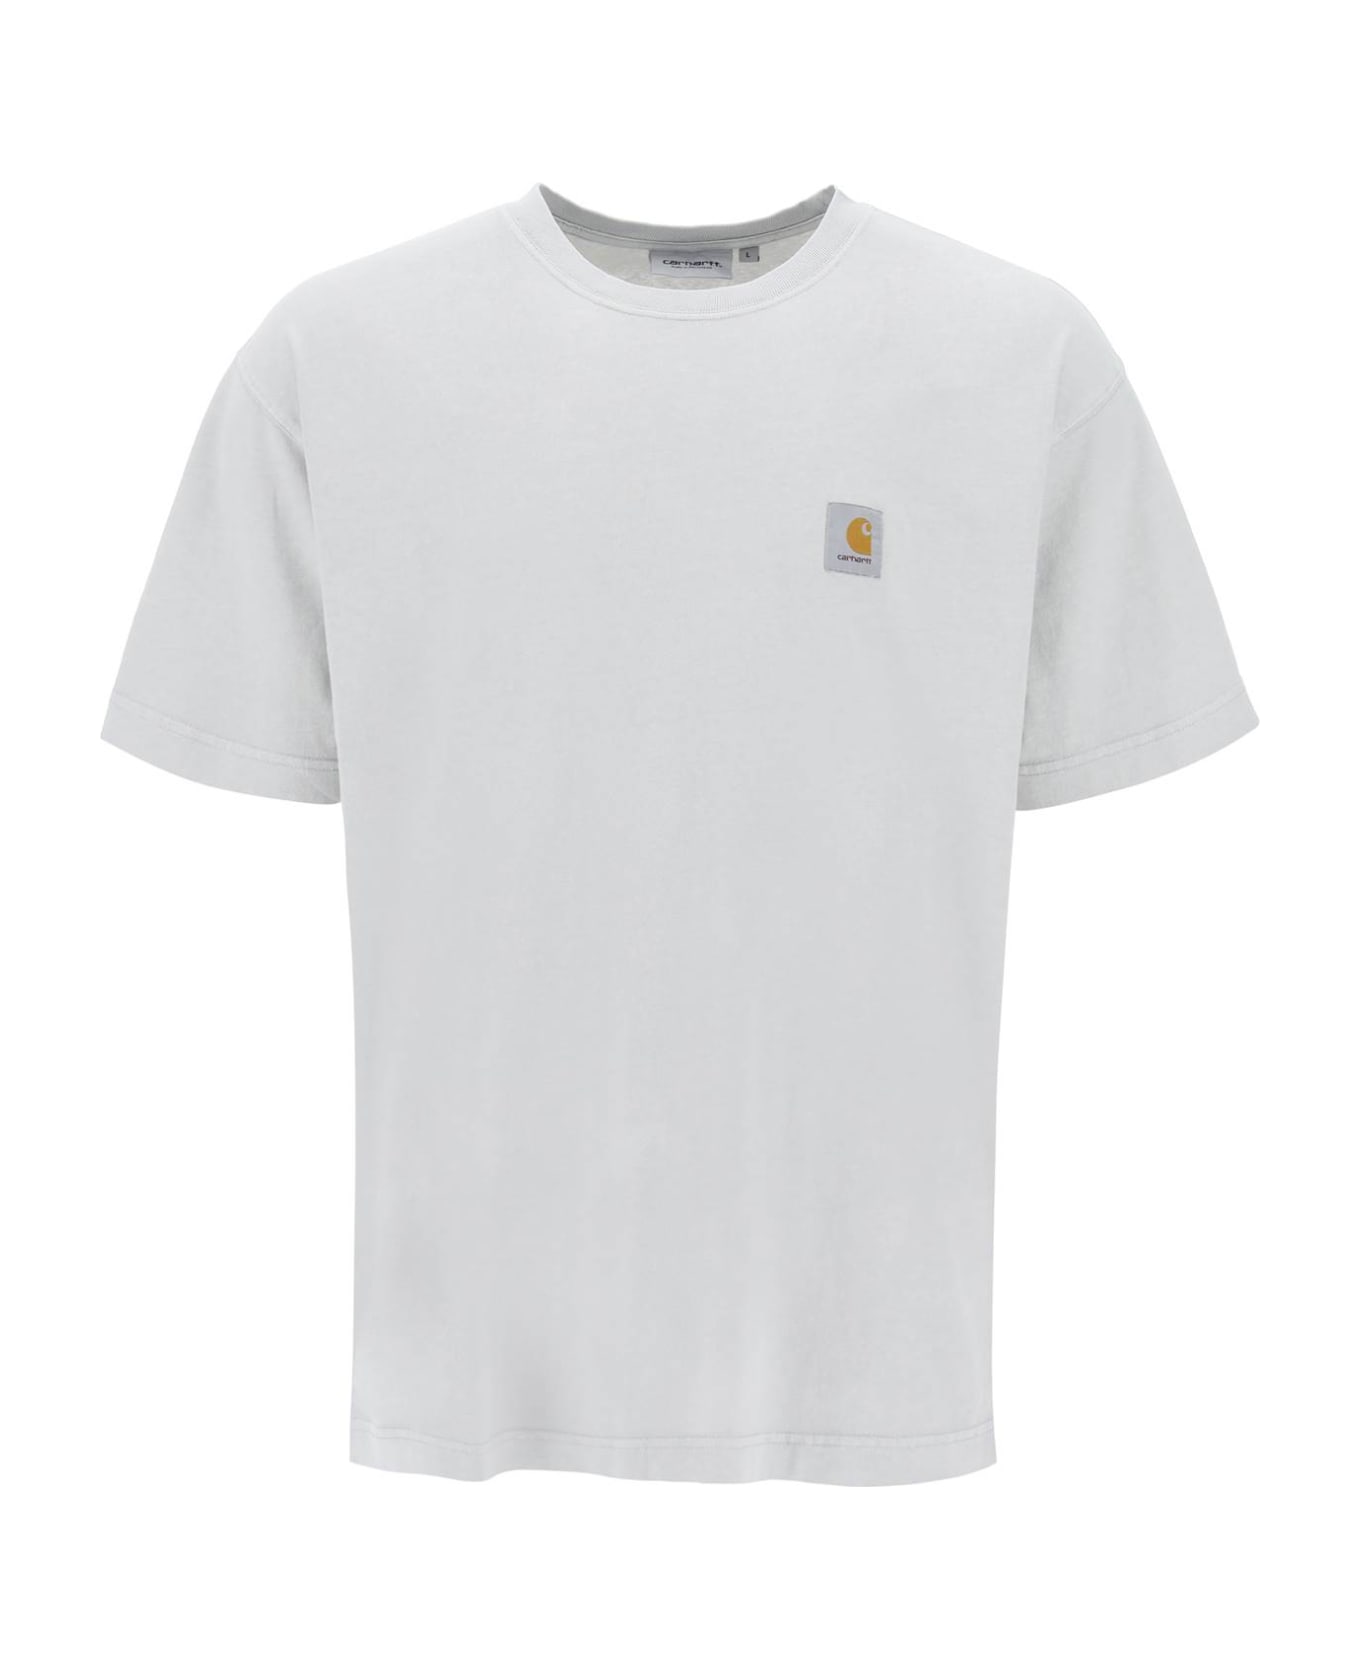 Carhartt Nelson T-shirt - SONIC SILVER (Grey)